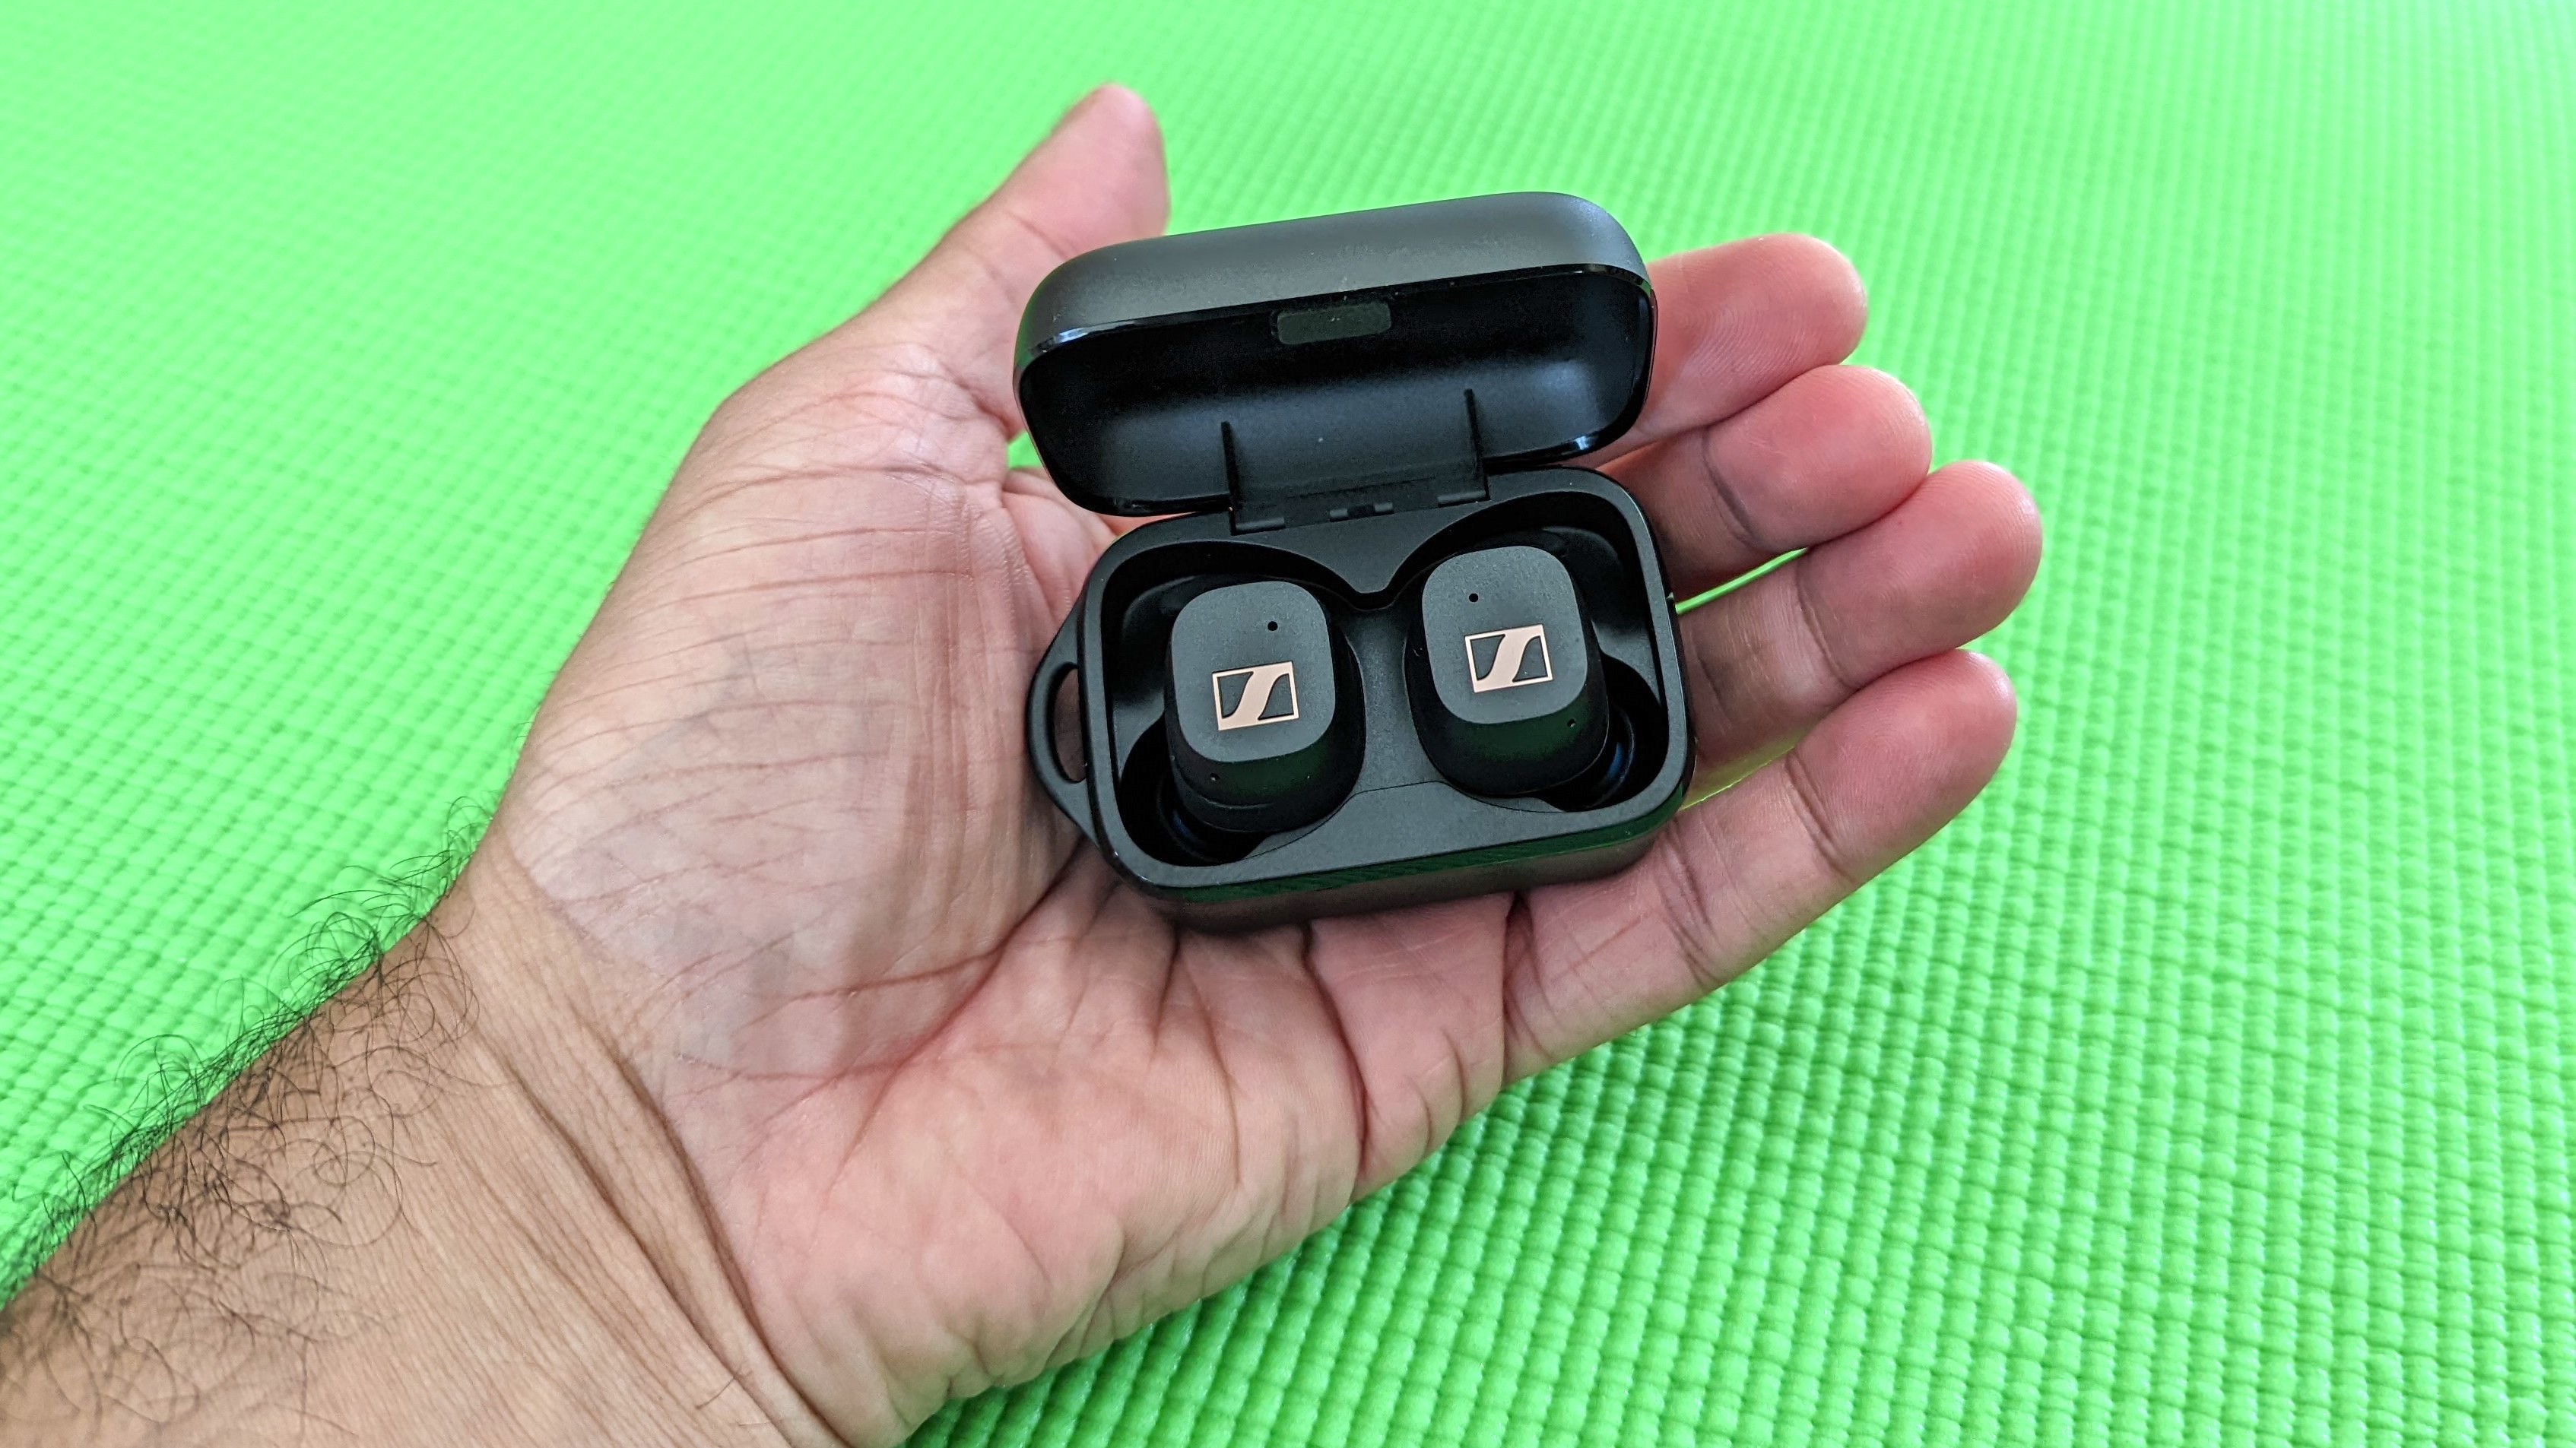 The Sennheiser Sport True Wireless charging case being held in hand